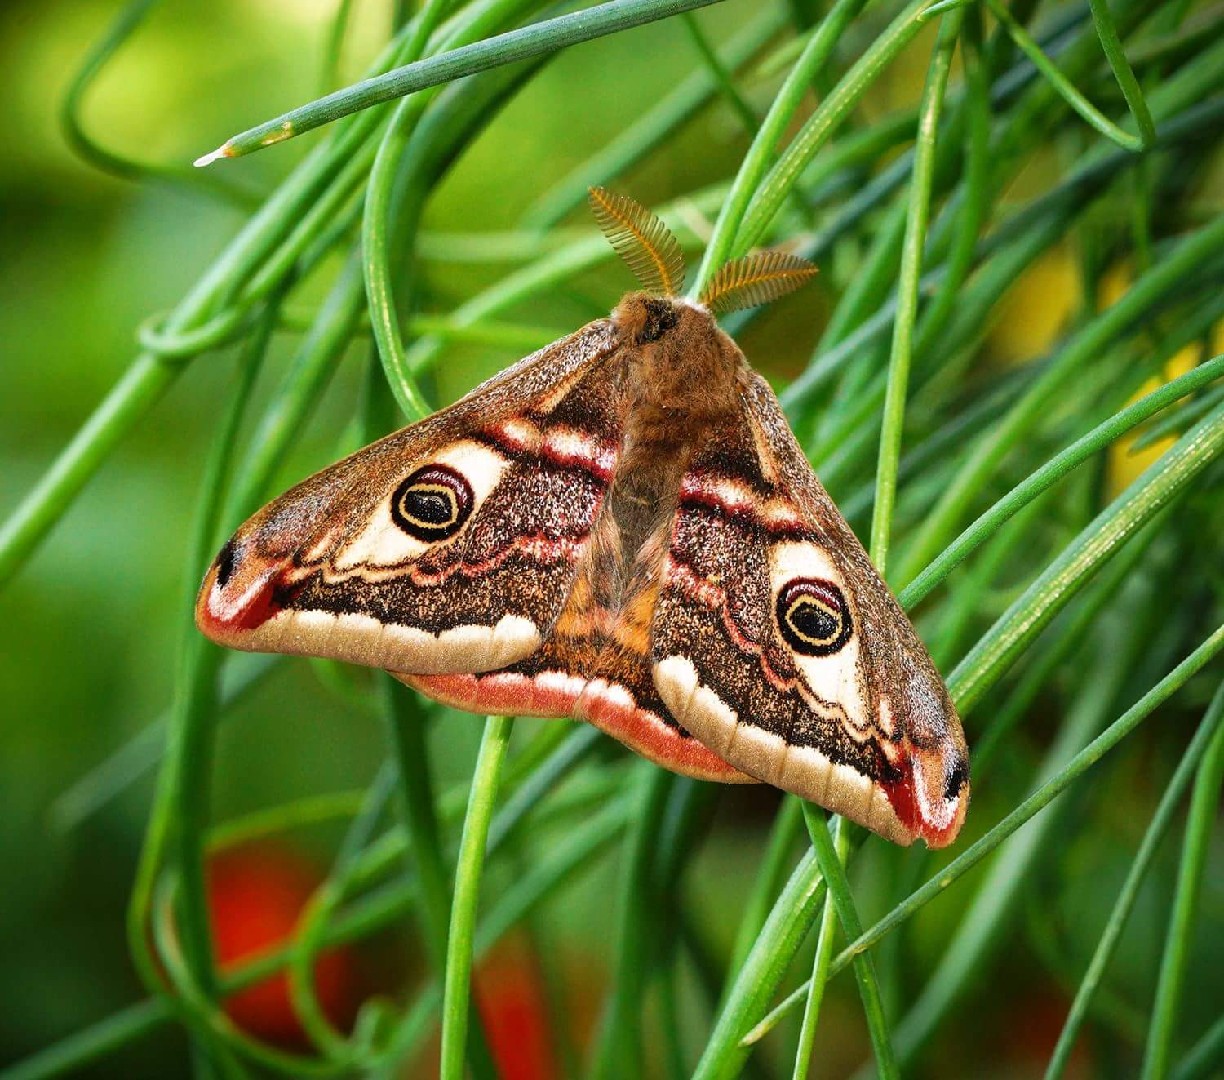 Emperor moths (Saturnia)